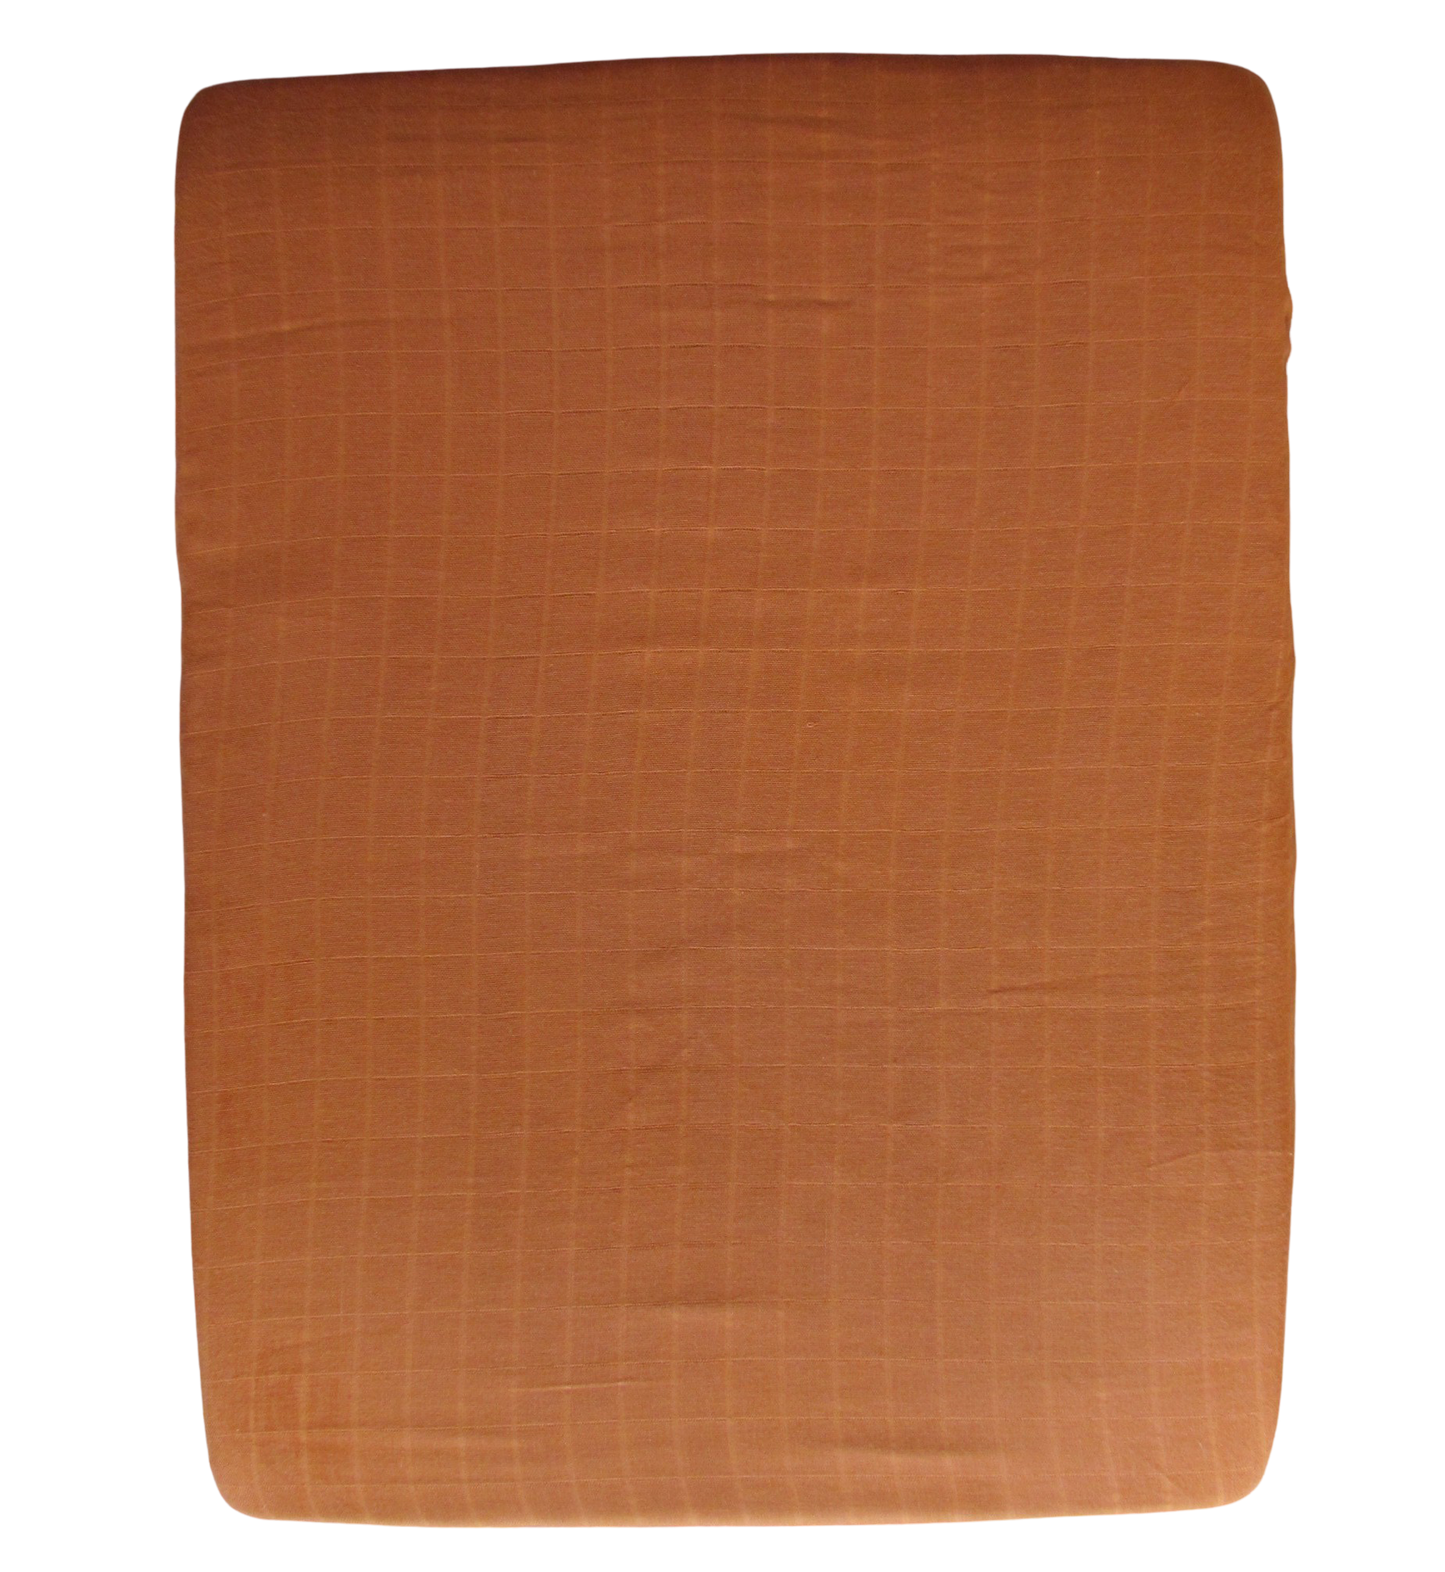 Brean Organic Cotton Muslin Change Pad Cover